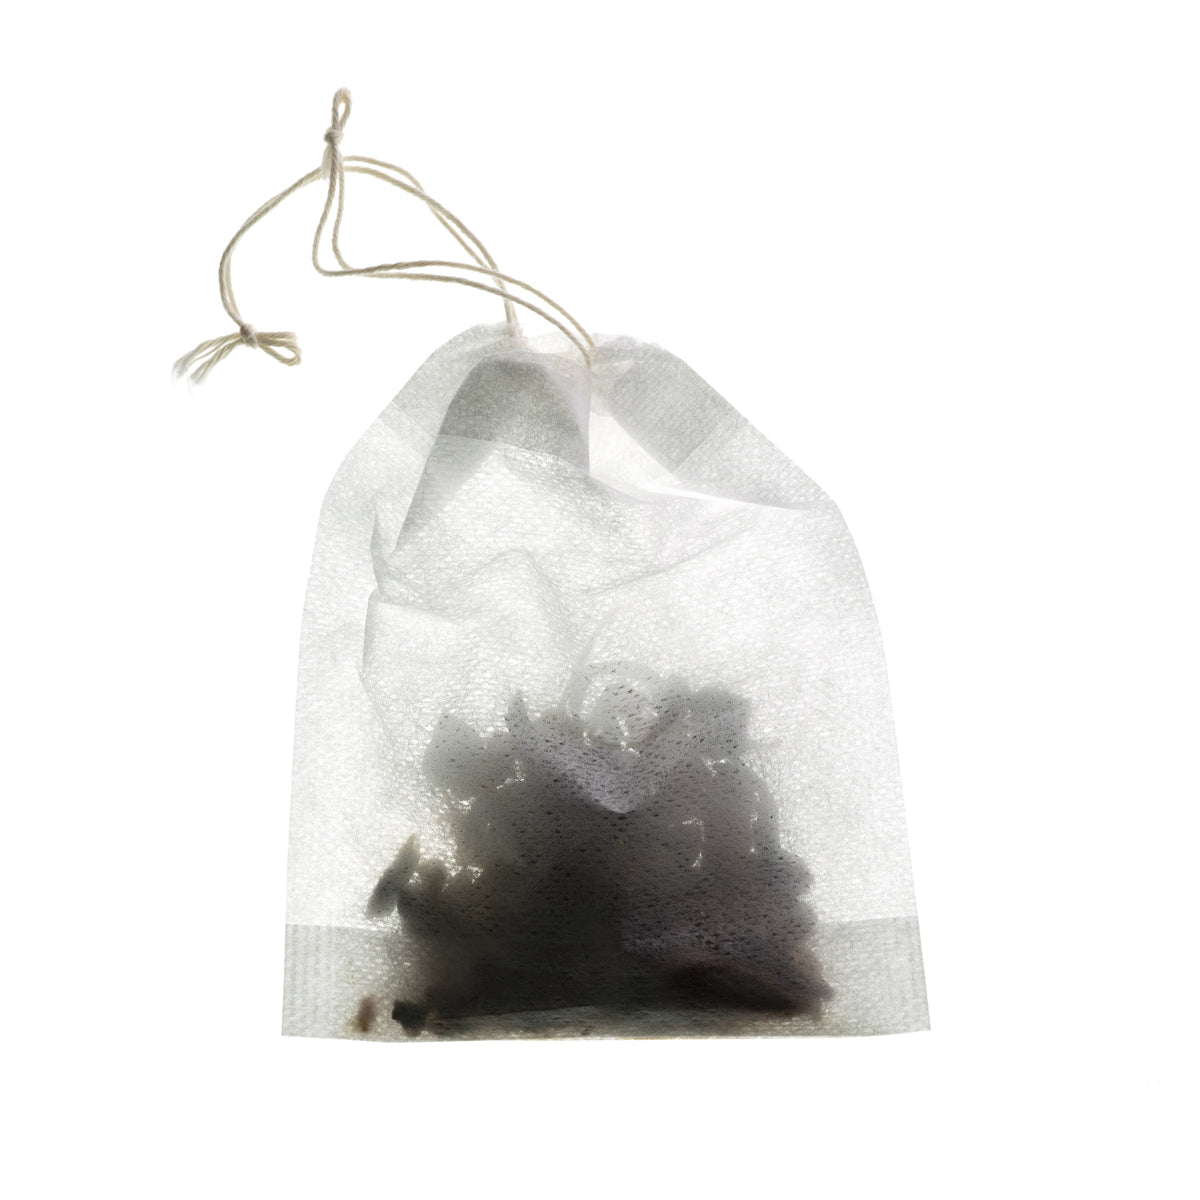 Single tea bag of SWING 2PM tea by noosha